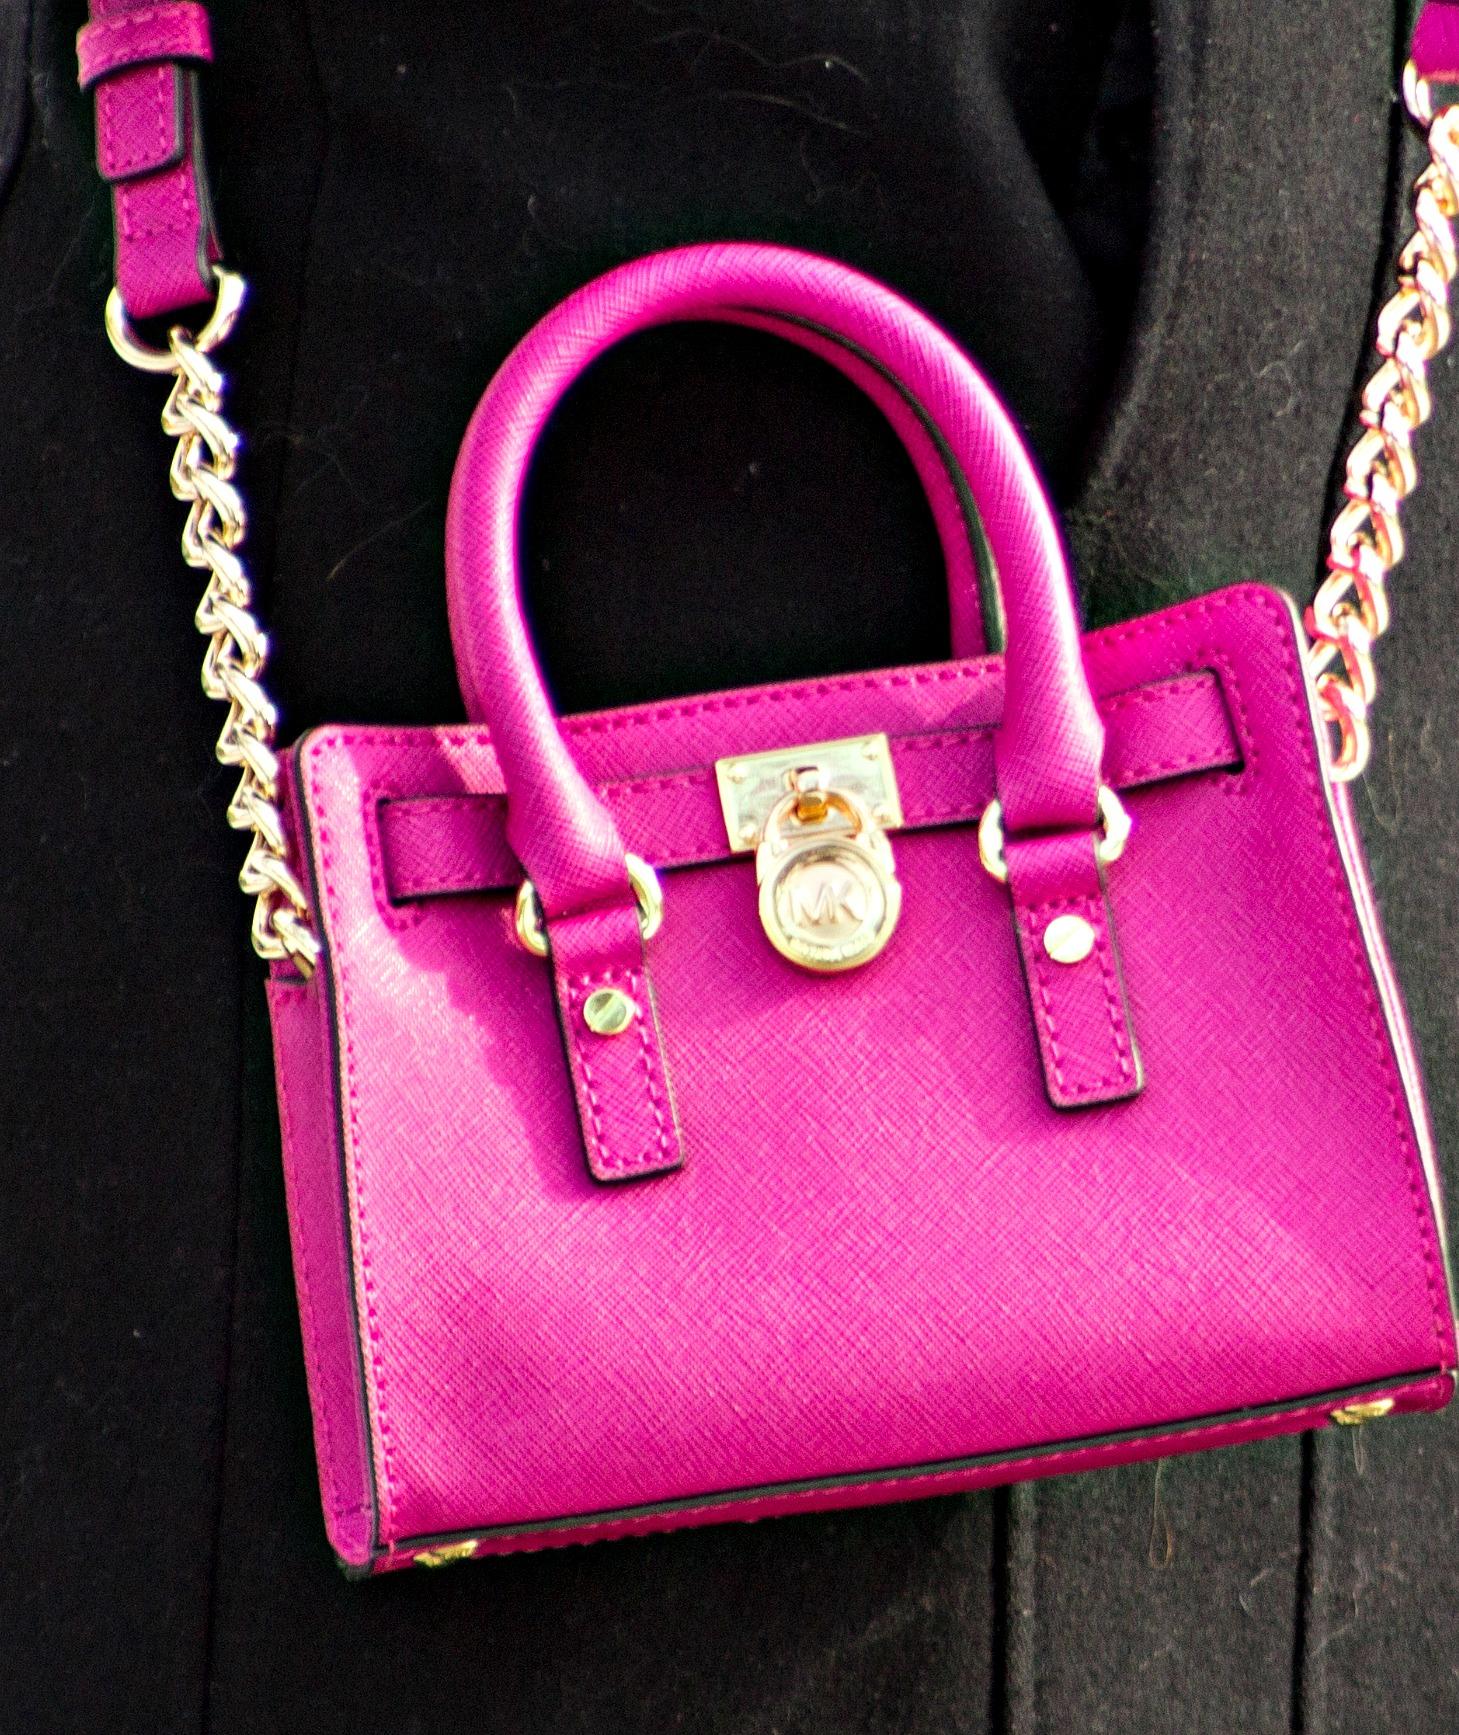 MK hot pink purse